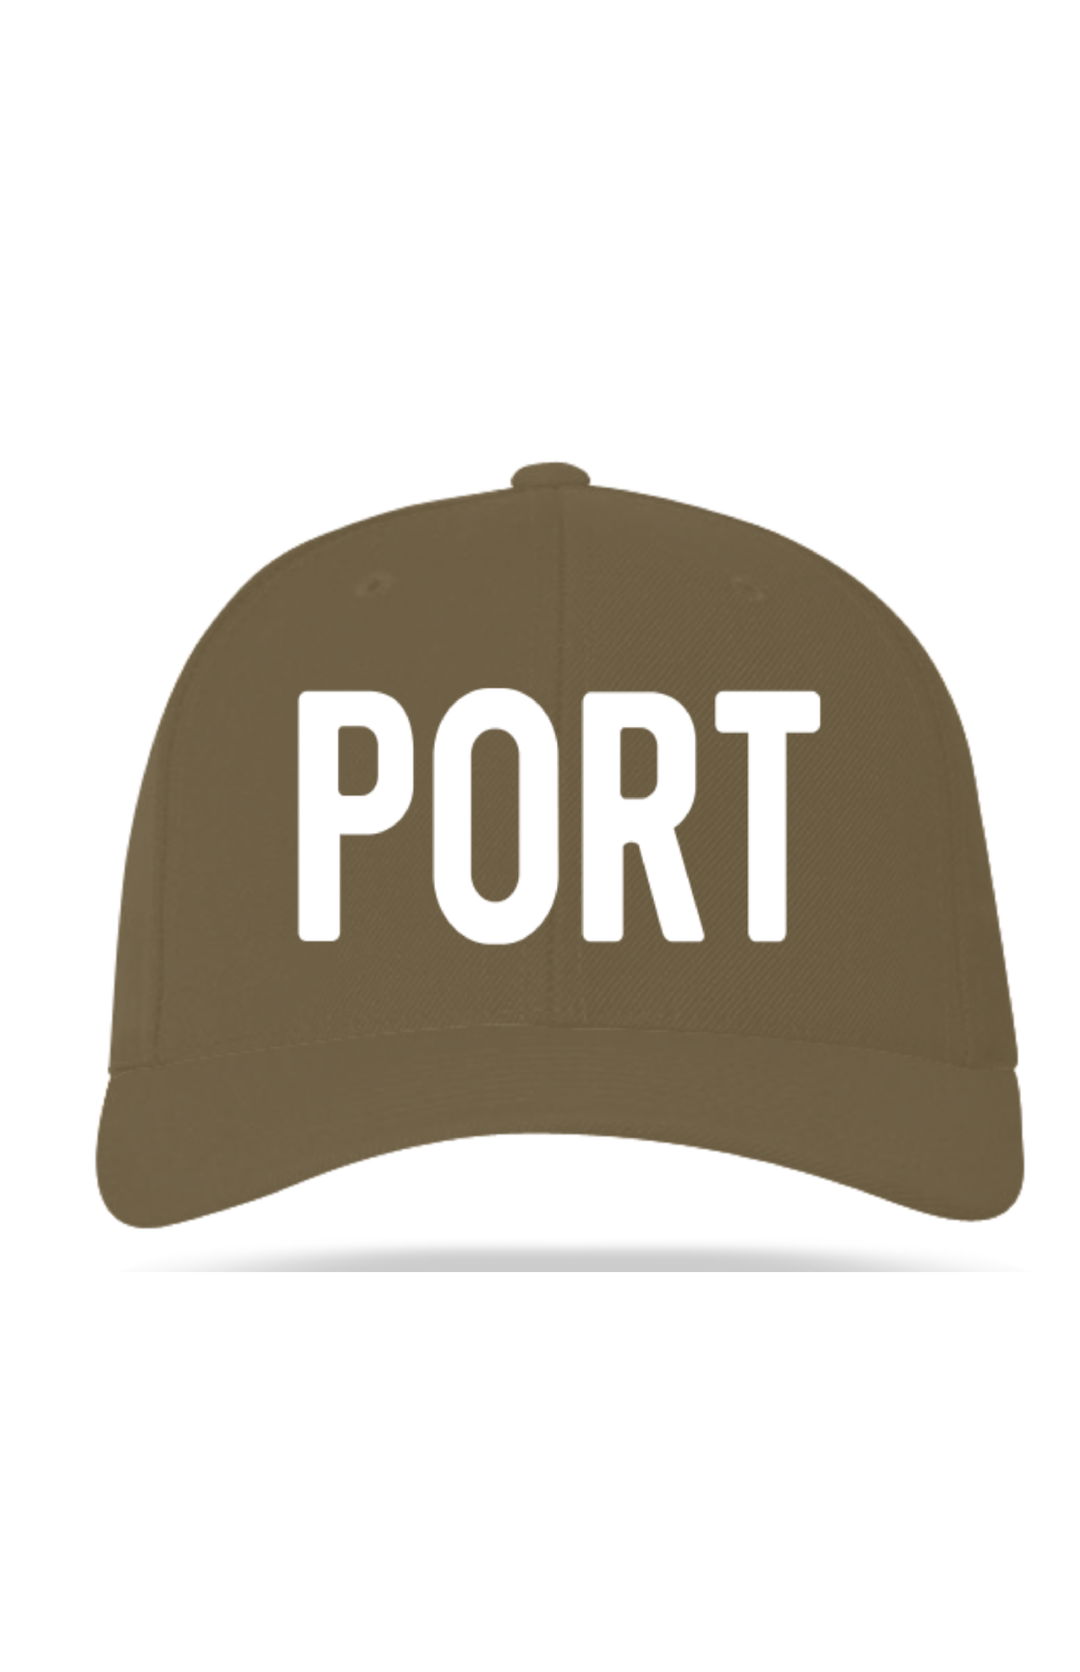 PORT Ball Cap- SAGE